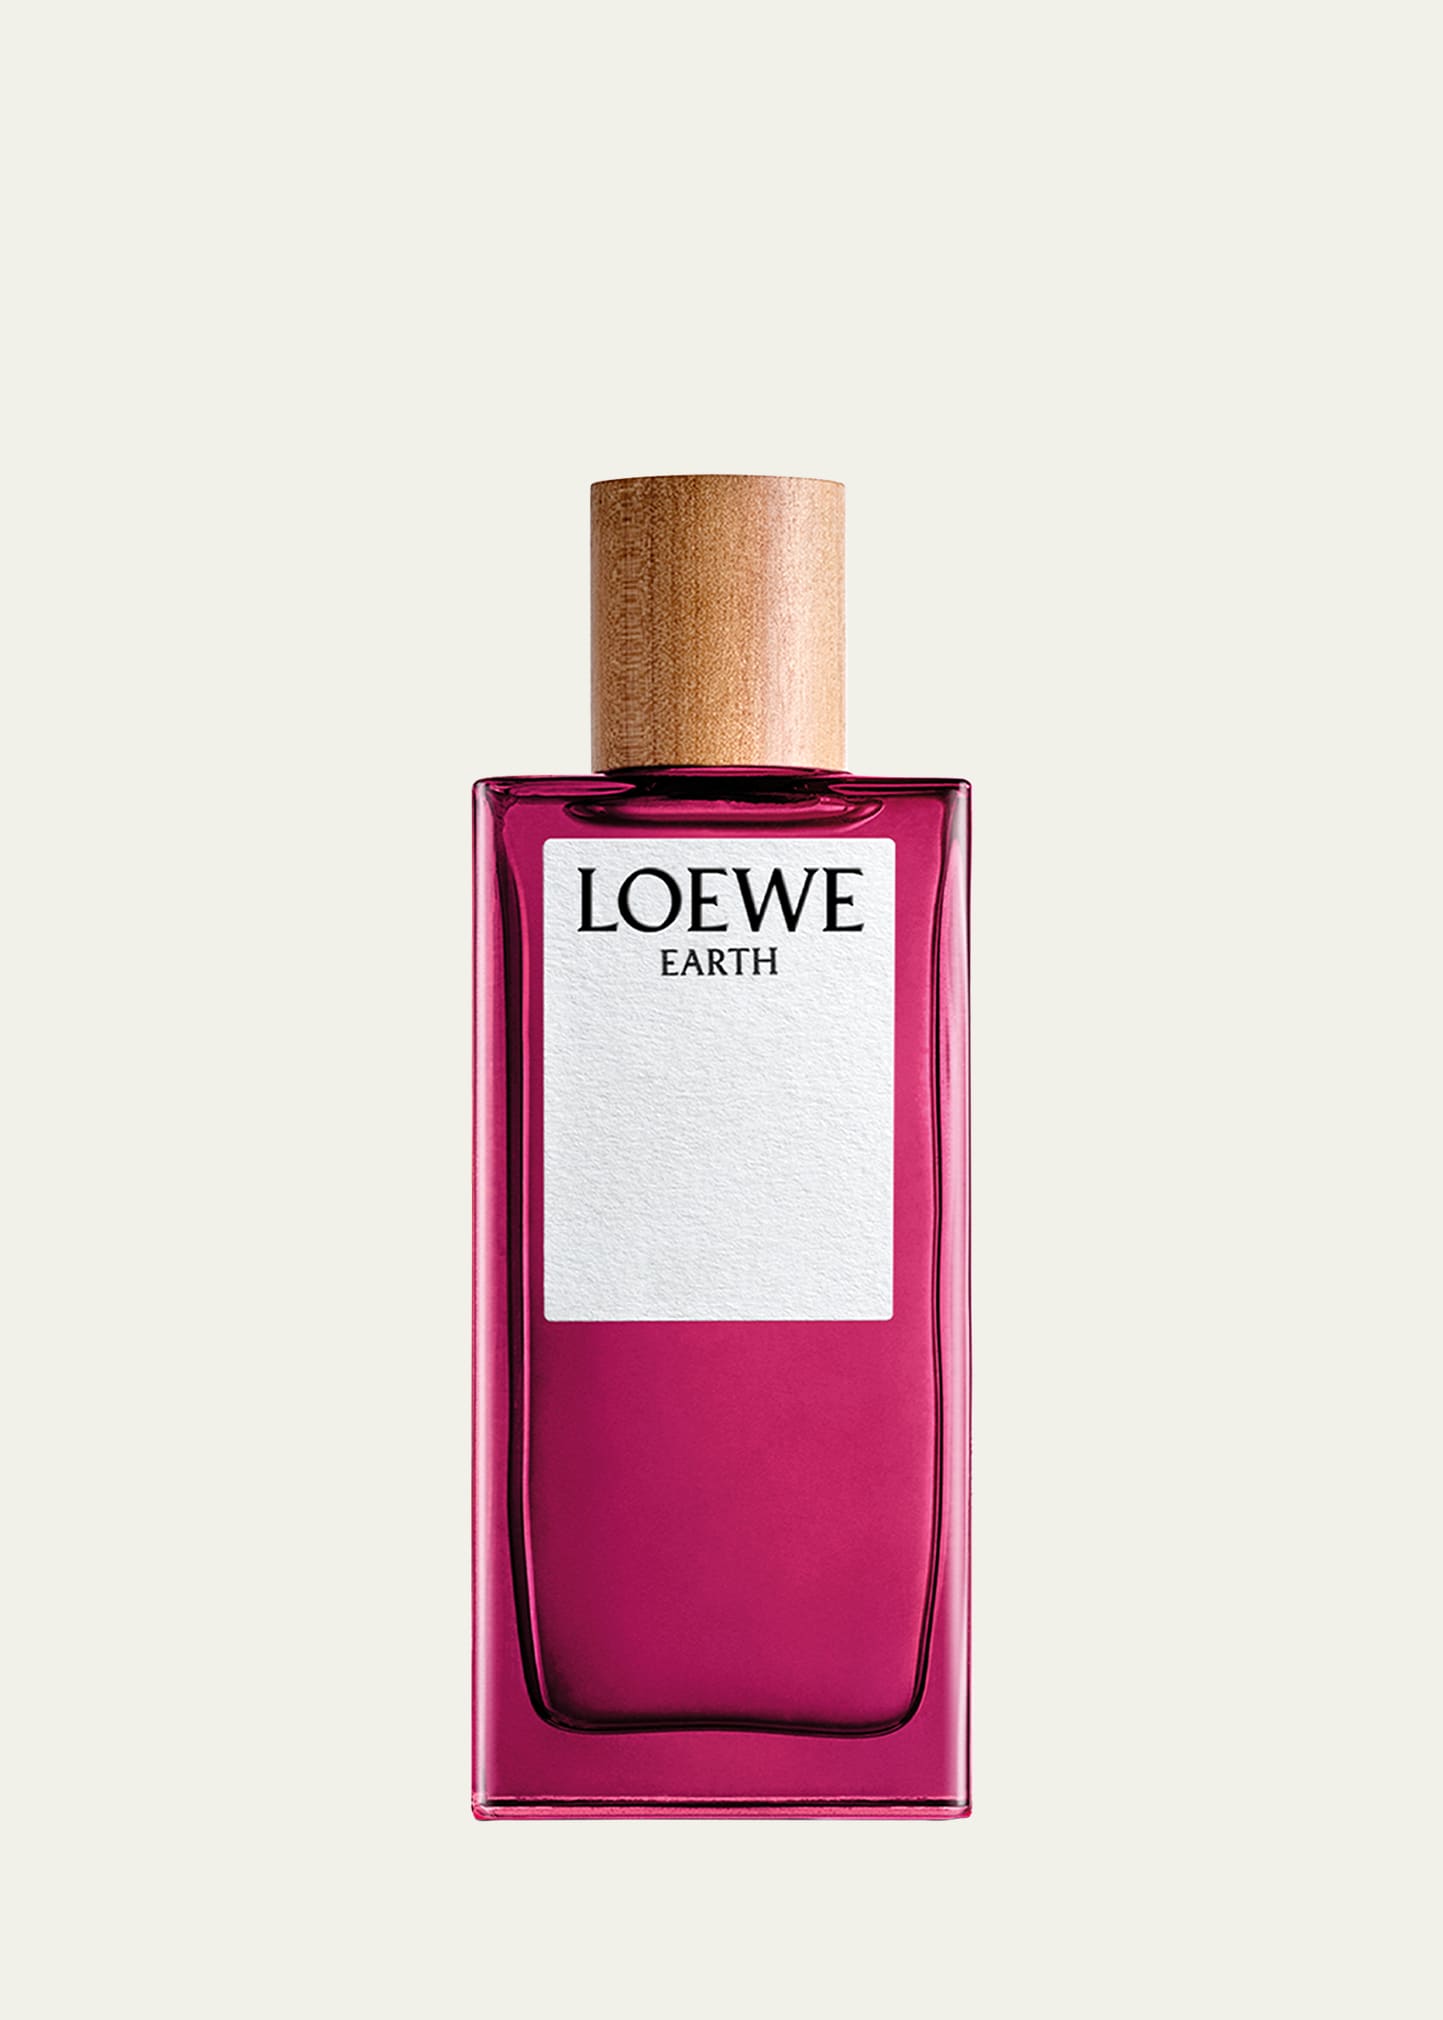 Loewe 3.4 oz. Earth Eau de Parfum